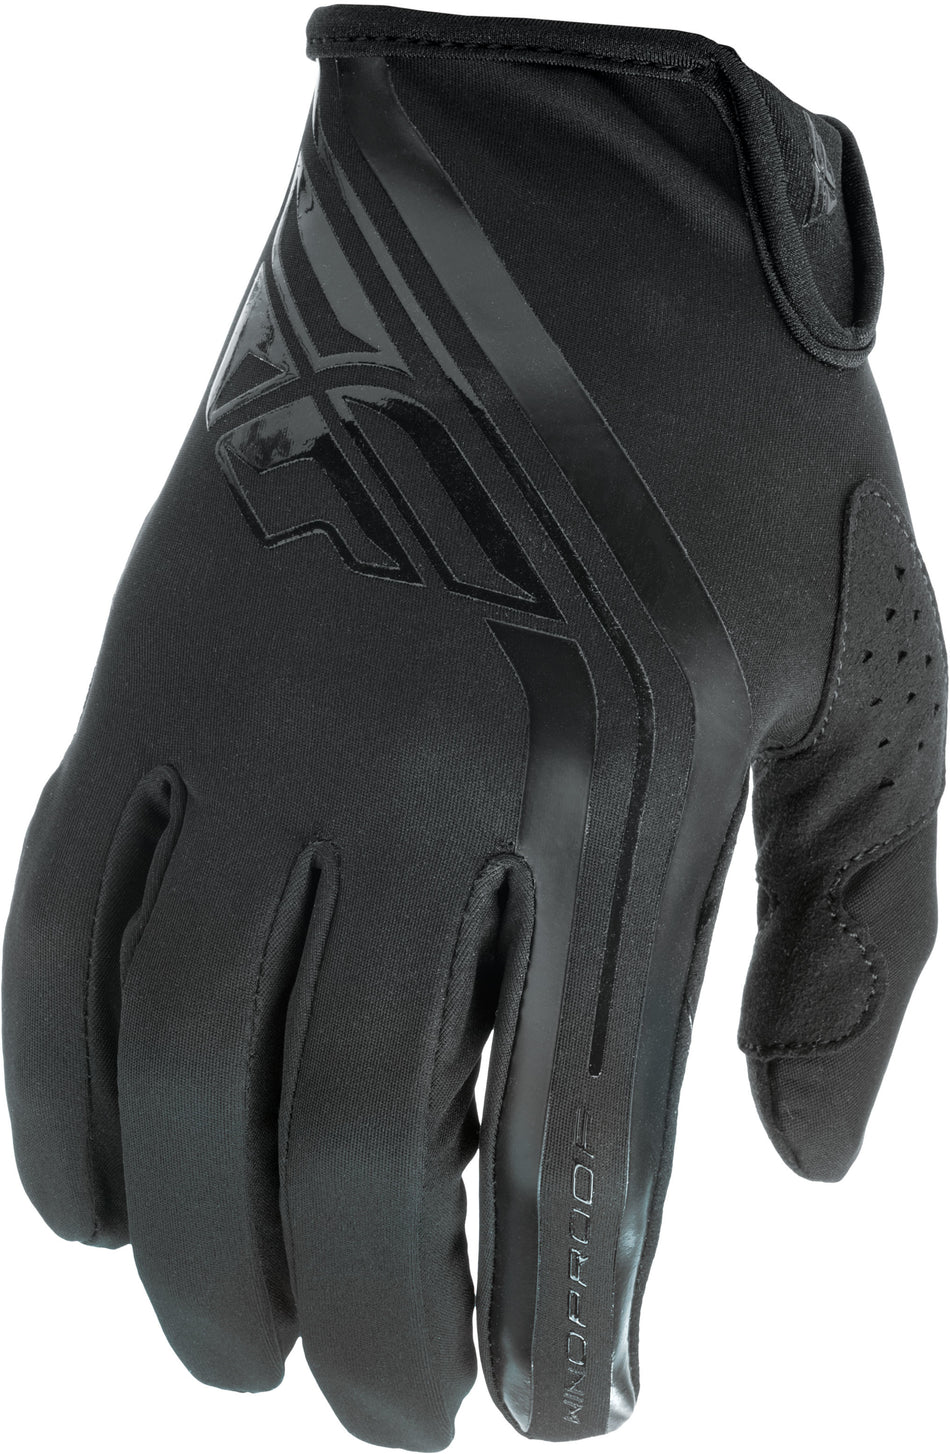 FLY RACING Windproof Gloves Black Sz 12 371-14012